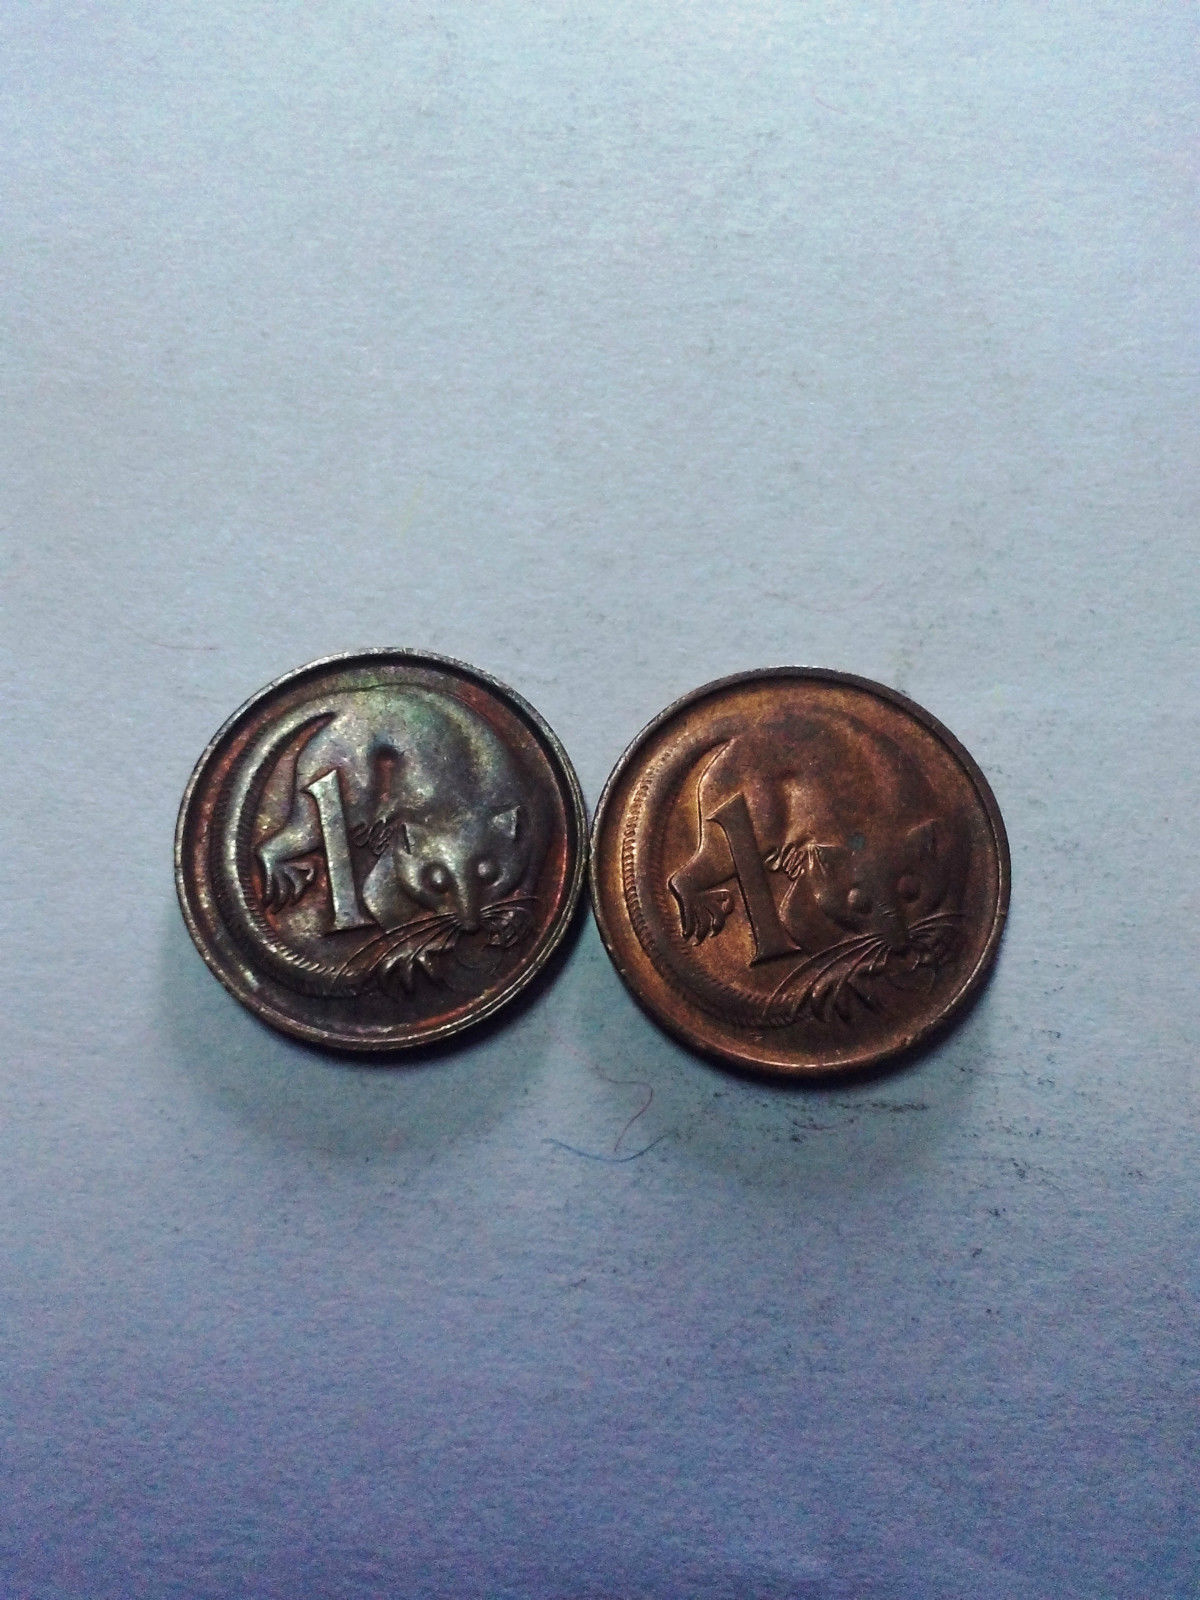 Lot 2 coins Australia 1 coin Elizabeth II 1980 1981 free shipping - $2.89